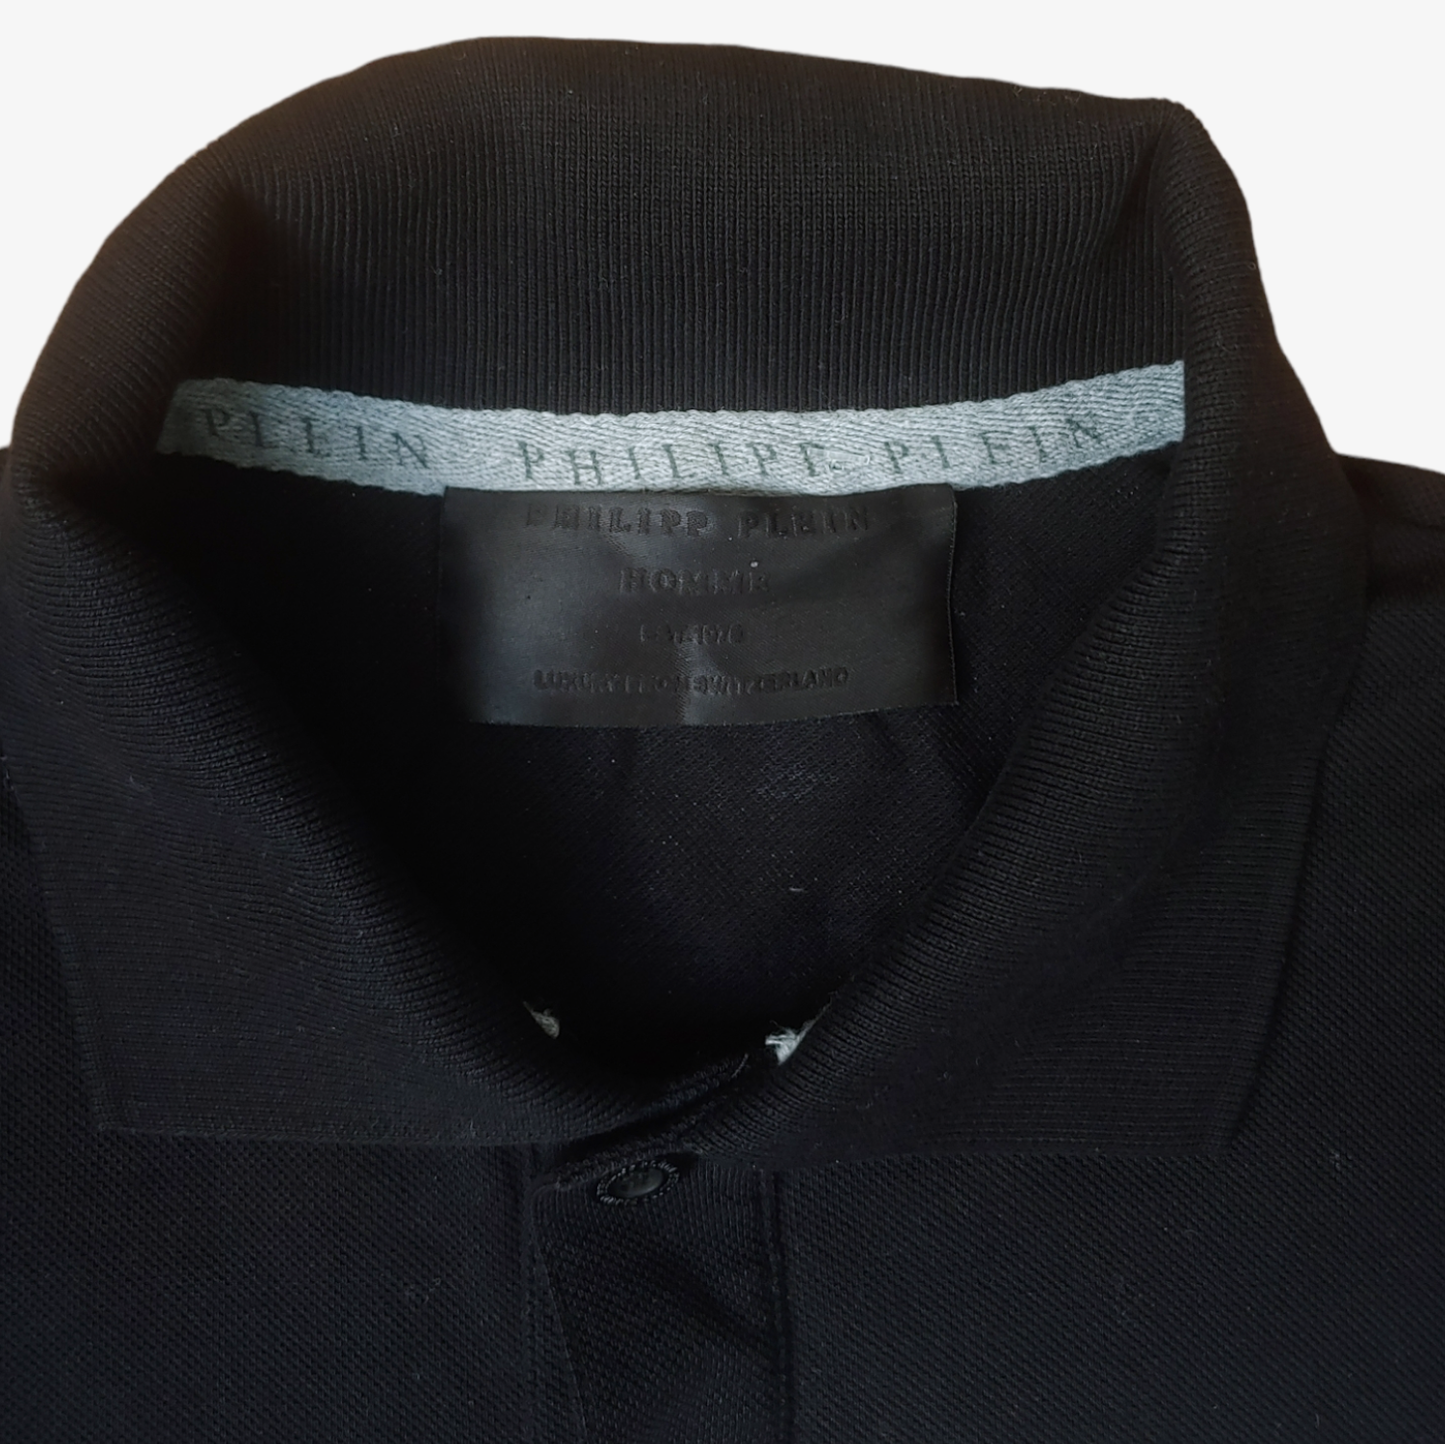 Philipp Plein Diamond Rhinestone Skull Polo Shirt Label - Casspios Dream